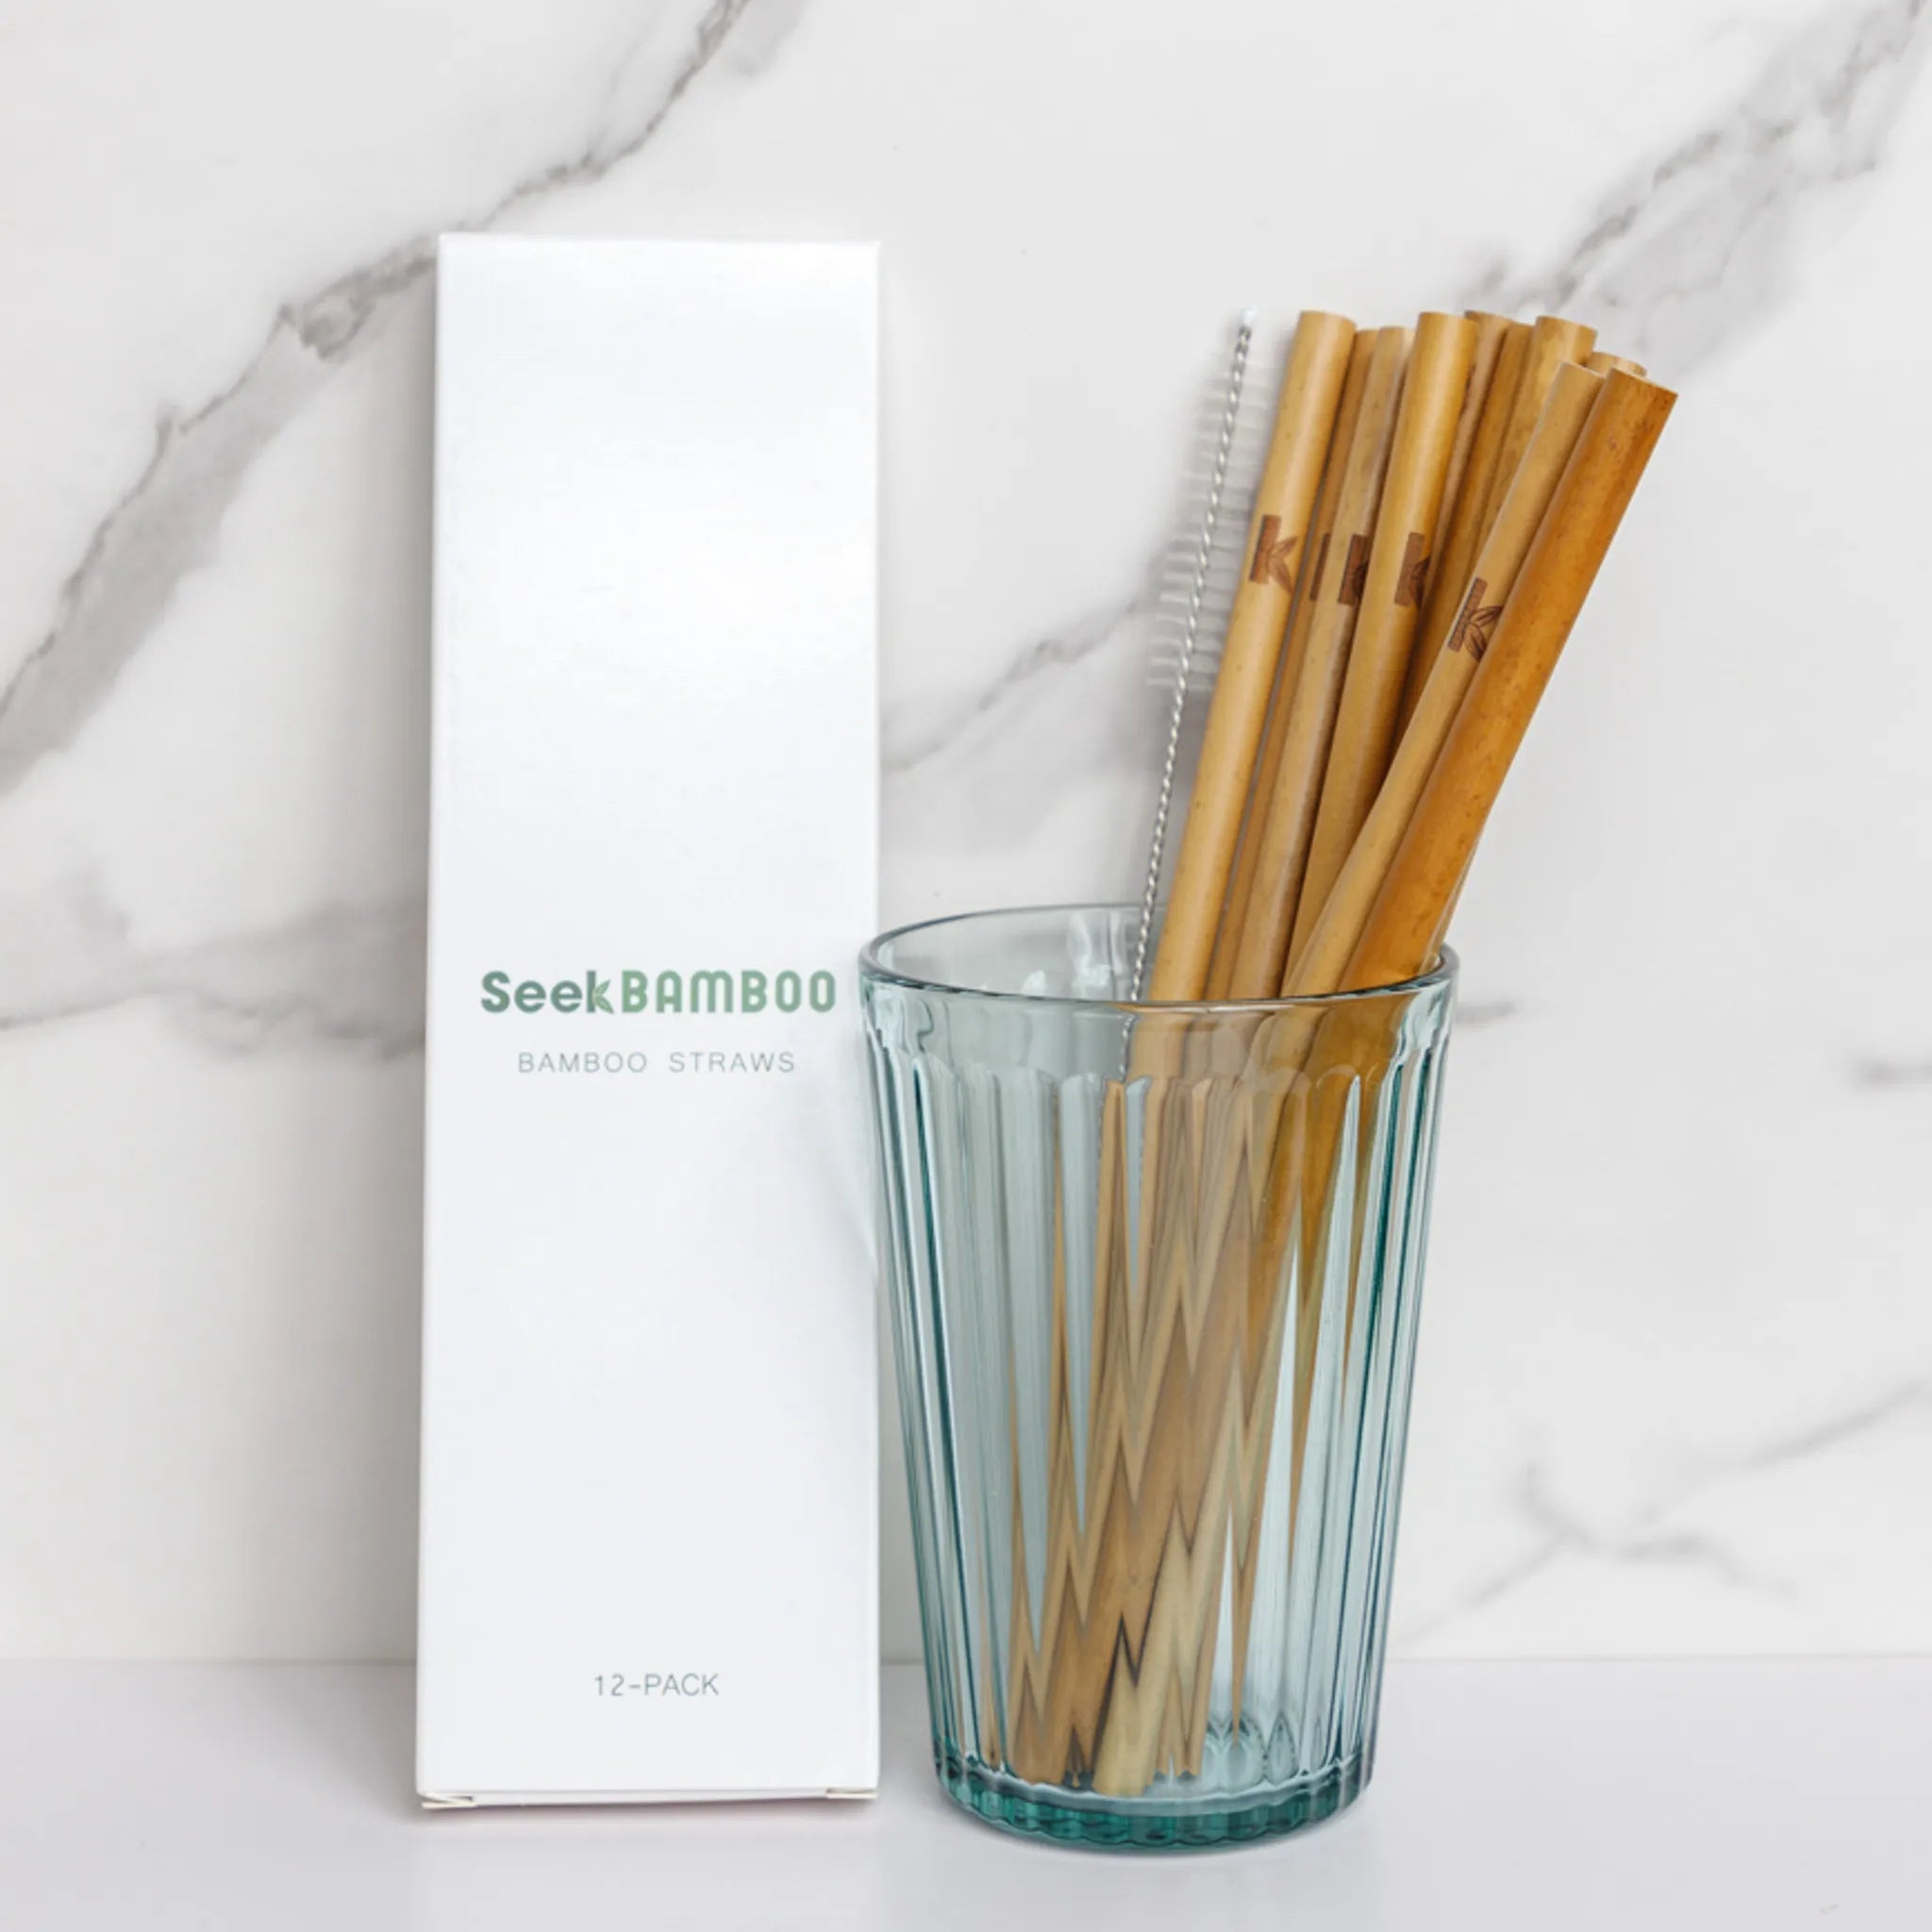 bamboo straws - seek bamboo